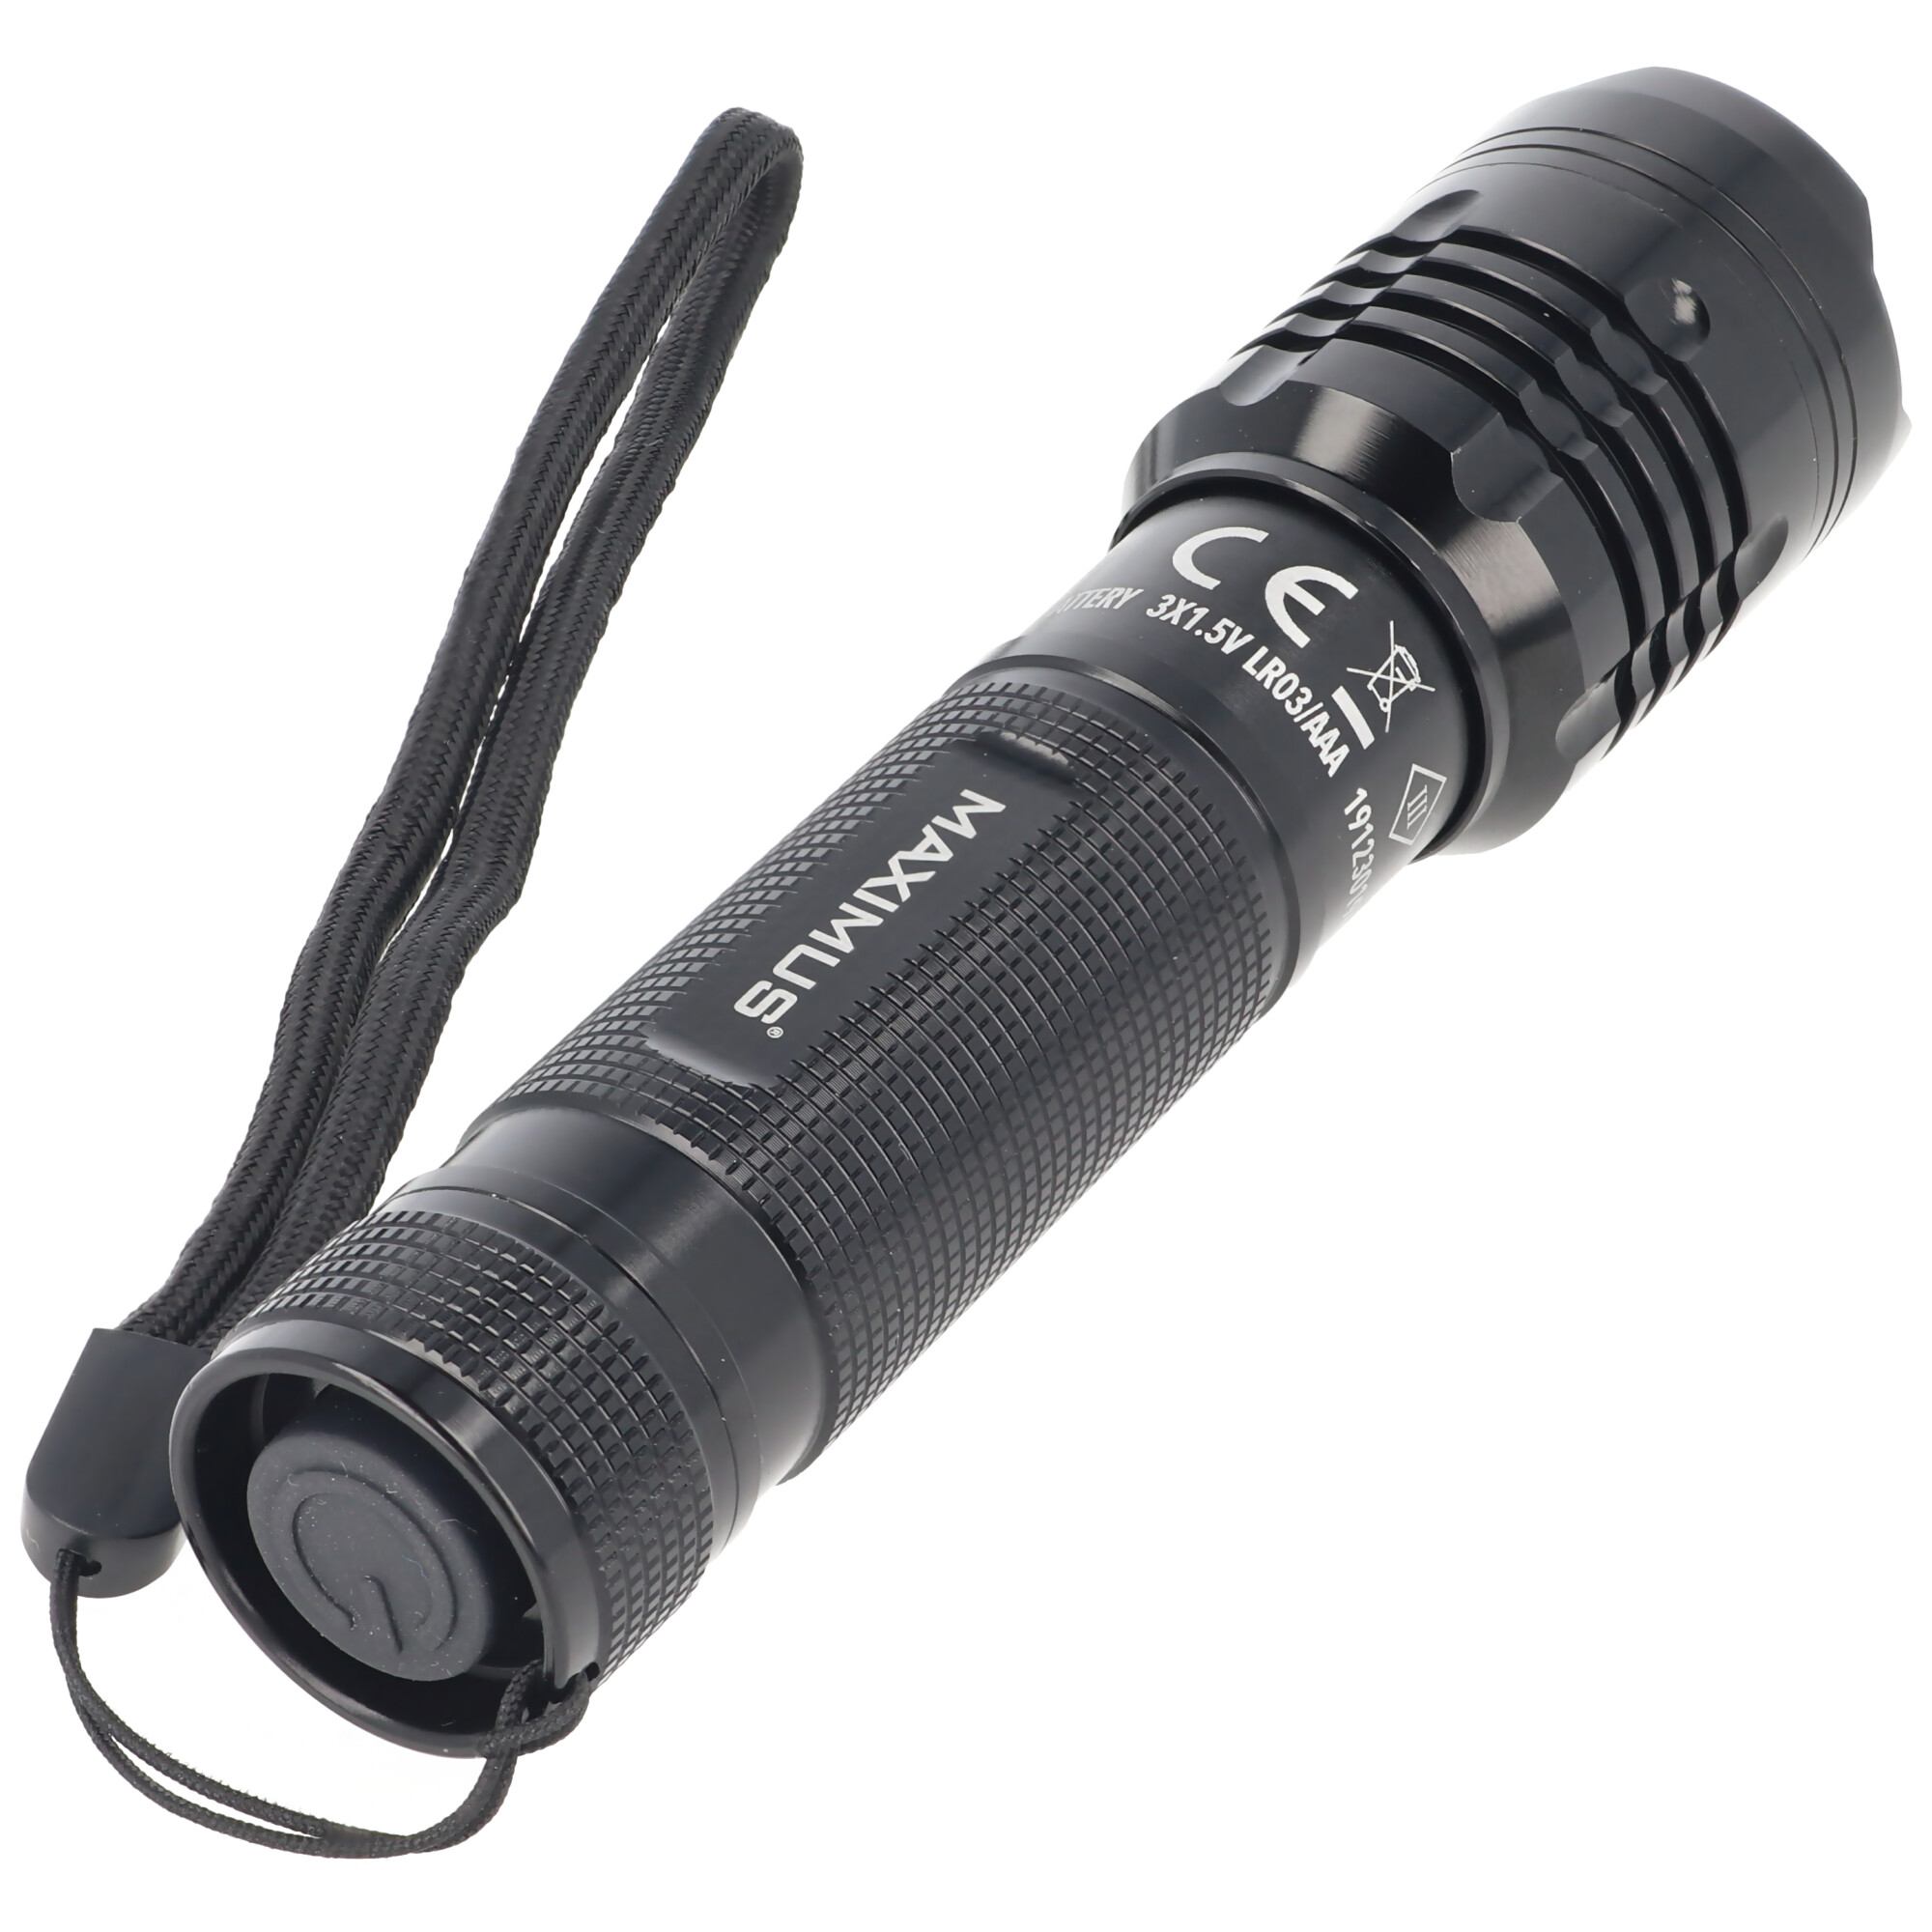 Zoom Fokus LED-Taschenlampe mit 5 Watt LED max. 535 Lumen, inklusive 3 AAA Duracell Batterien